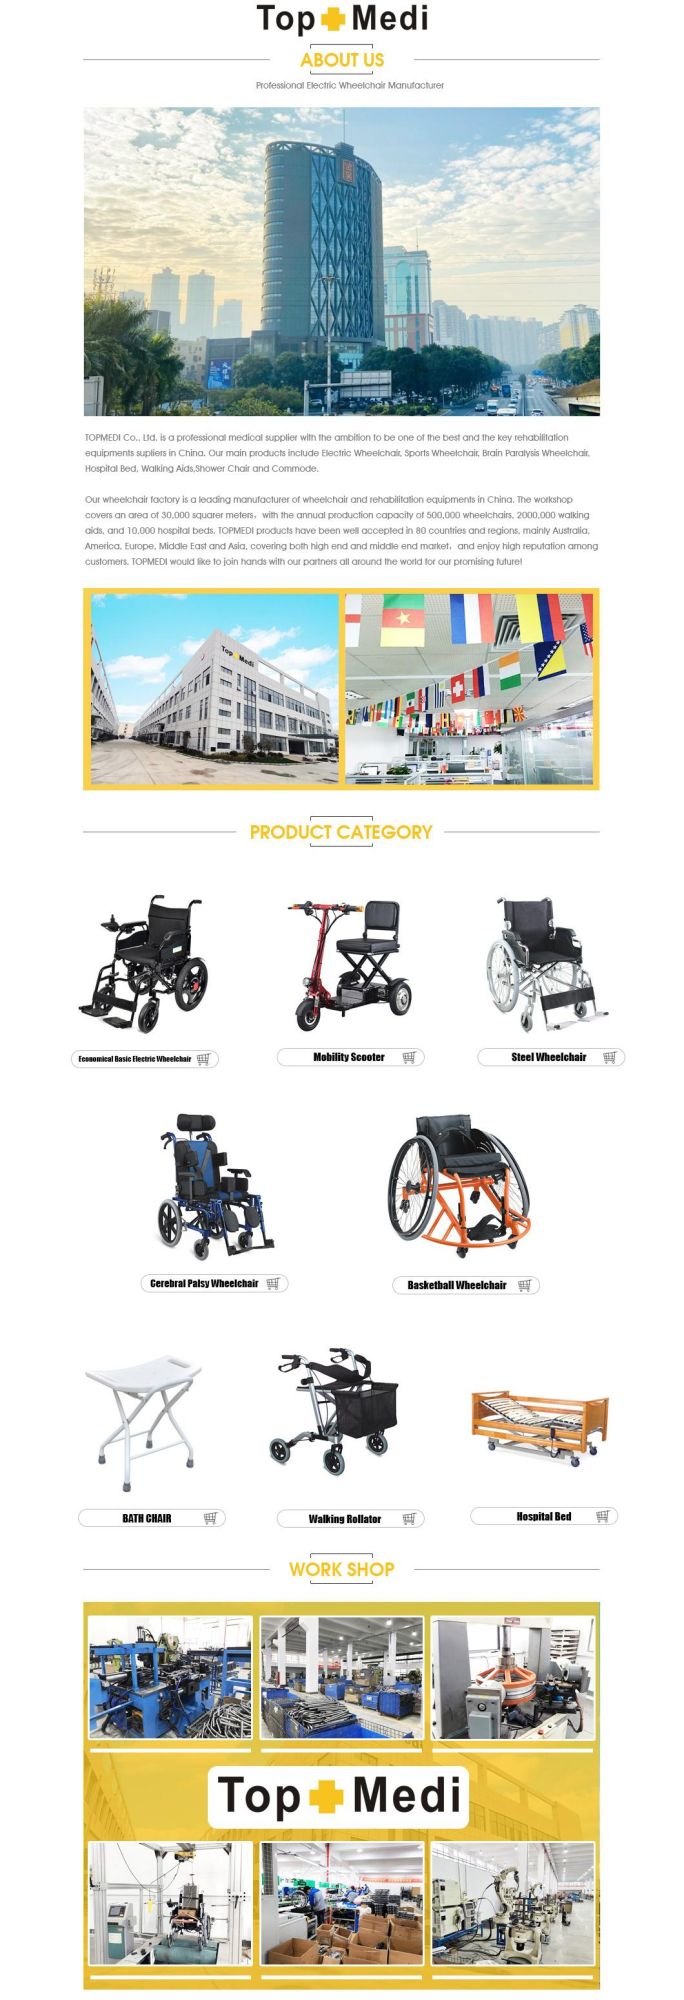 Topmedi Medical Equipment Folding Electric Wheelchair